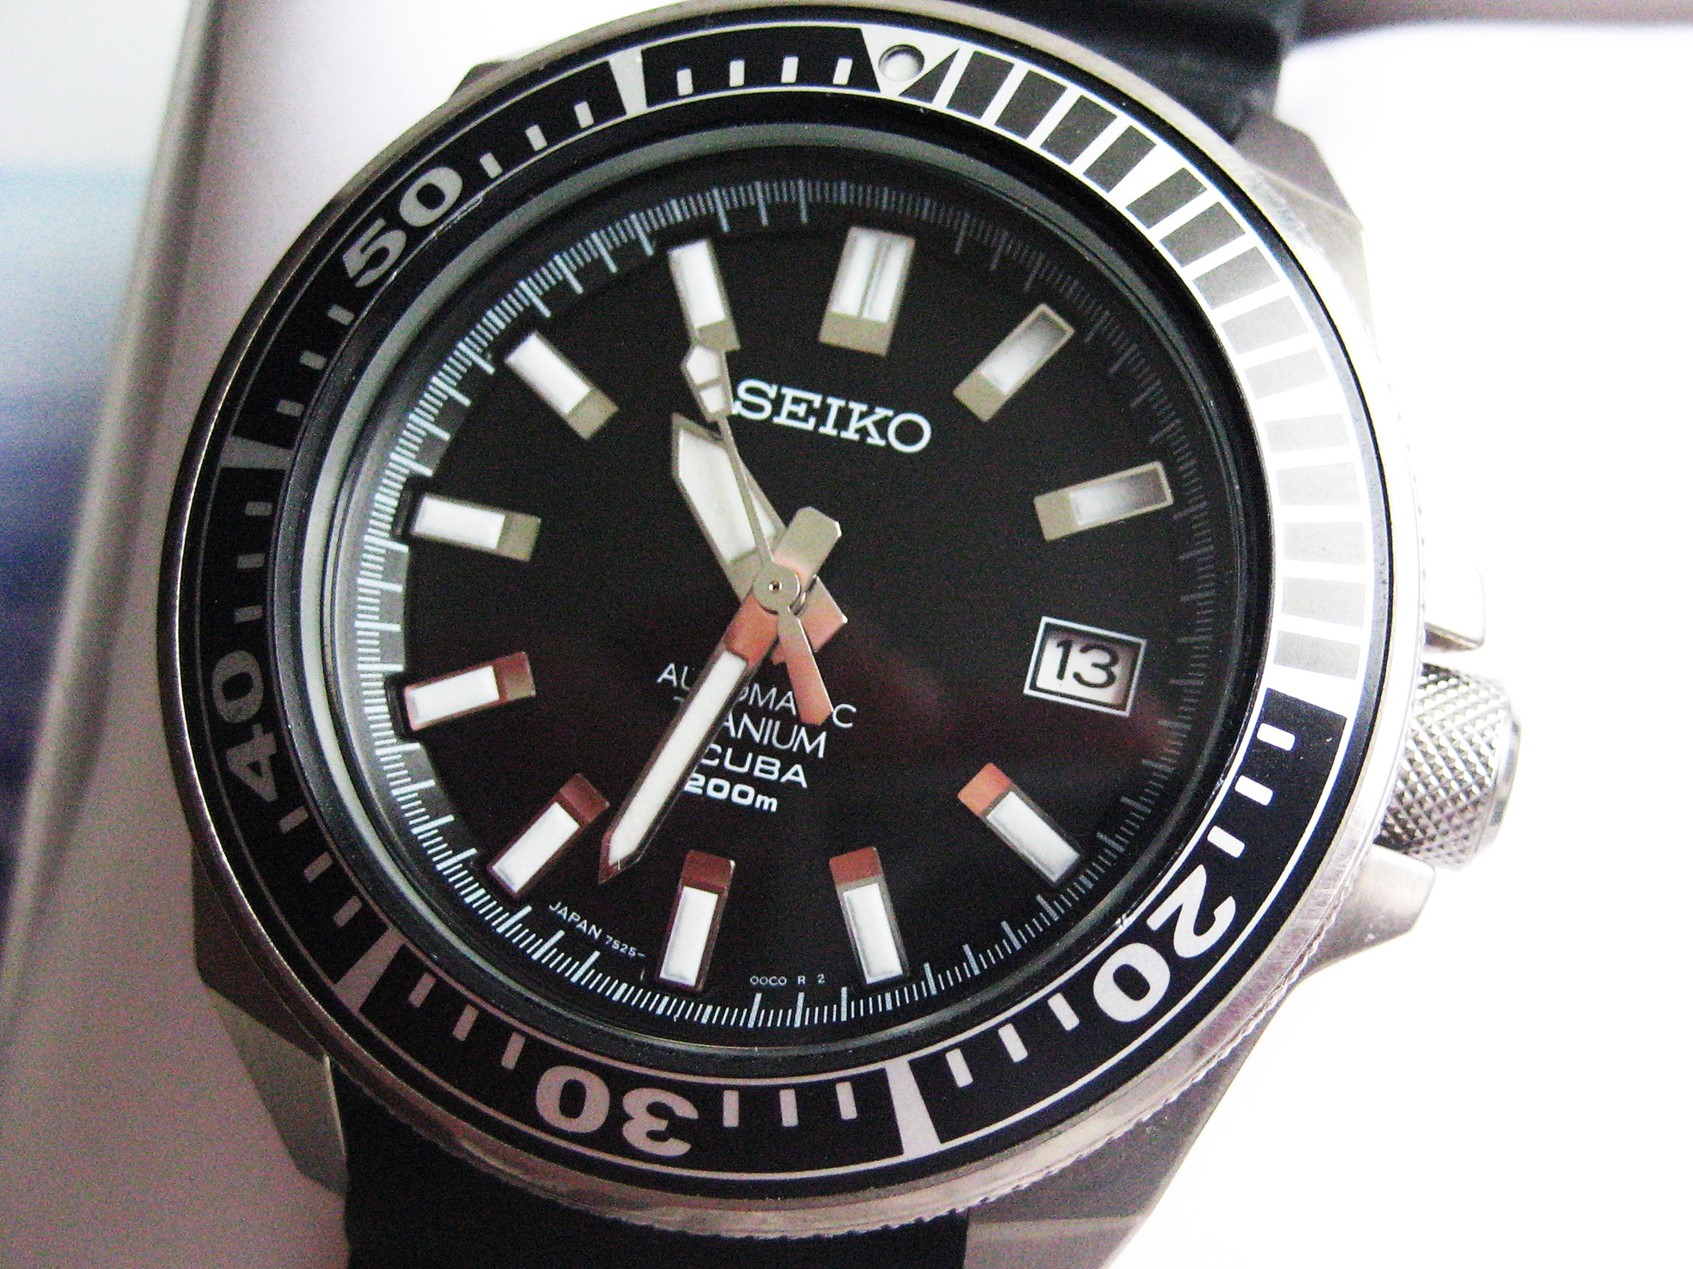 a watch flipper's diary: No 21, 26 & 58 - Seiko SBDA001